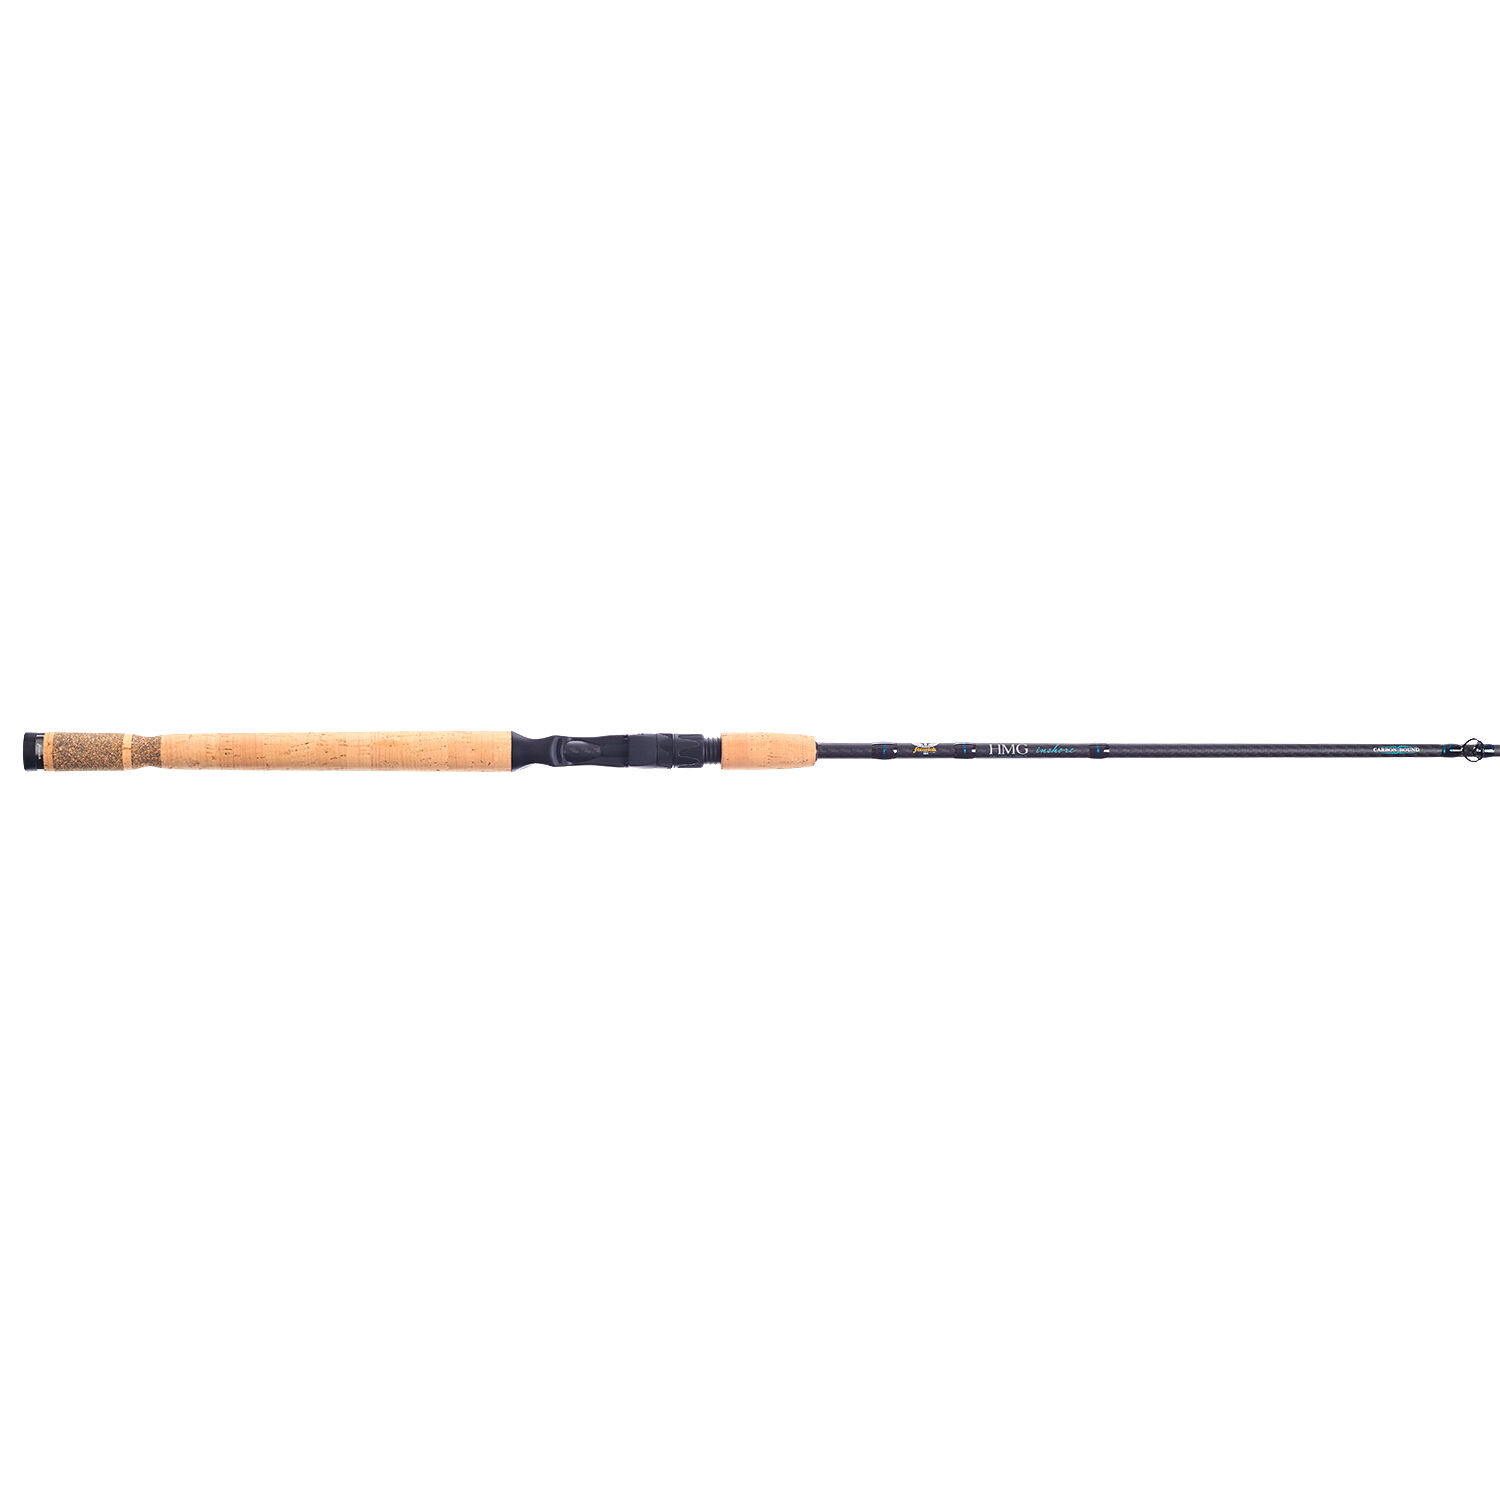 FENWICK HMG CASTING TRAVEL 7' Medium AND Medium HEAVY Fishing Rod 